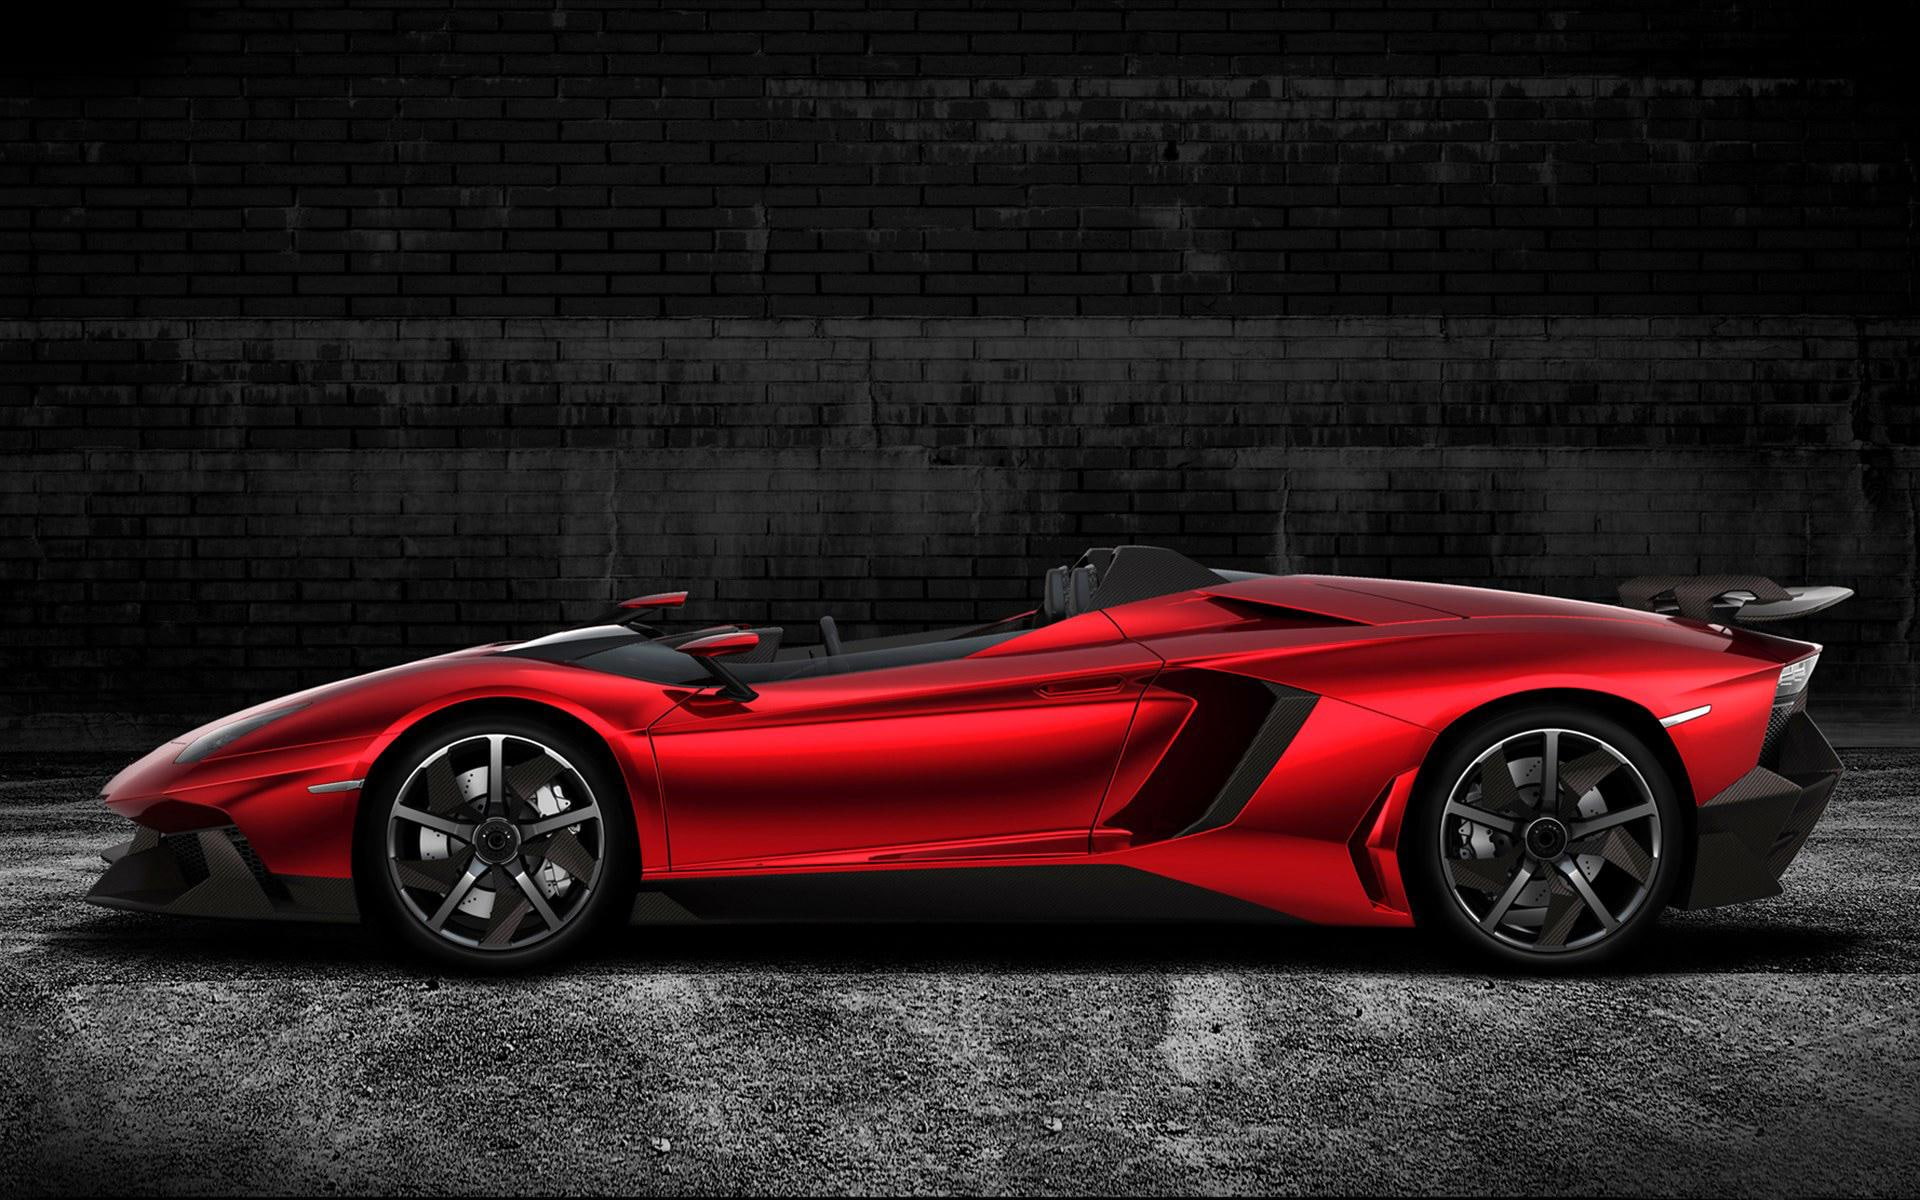 2012 Lamborghini Aventador J 4, red convertible sports car, cars